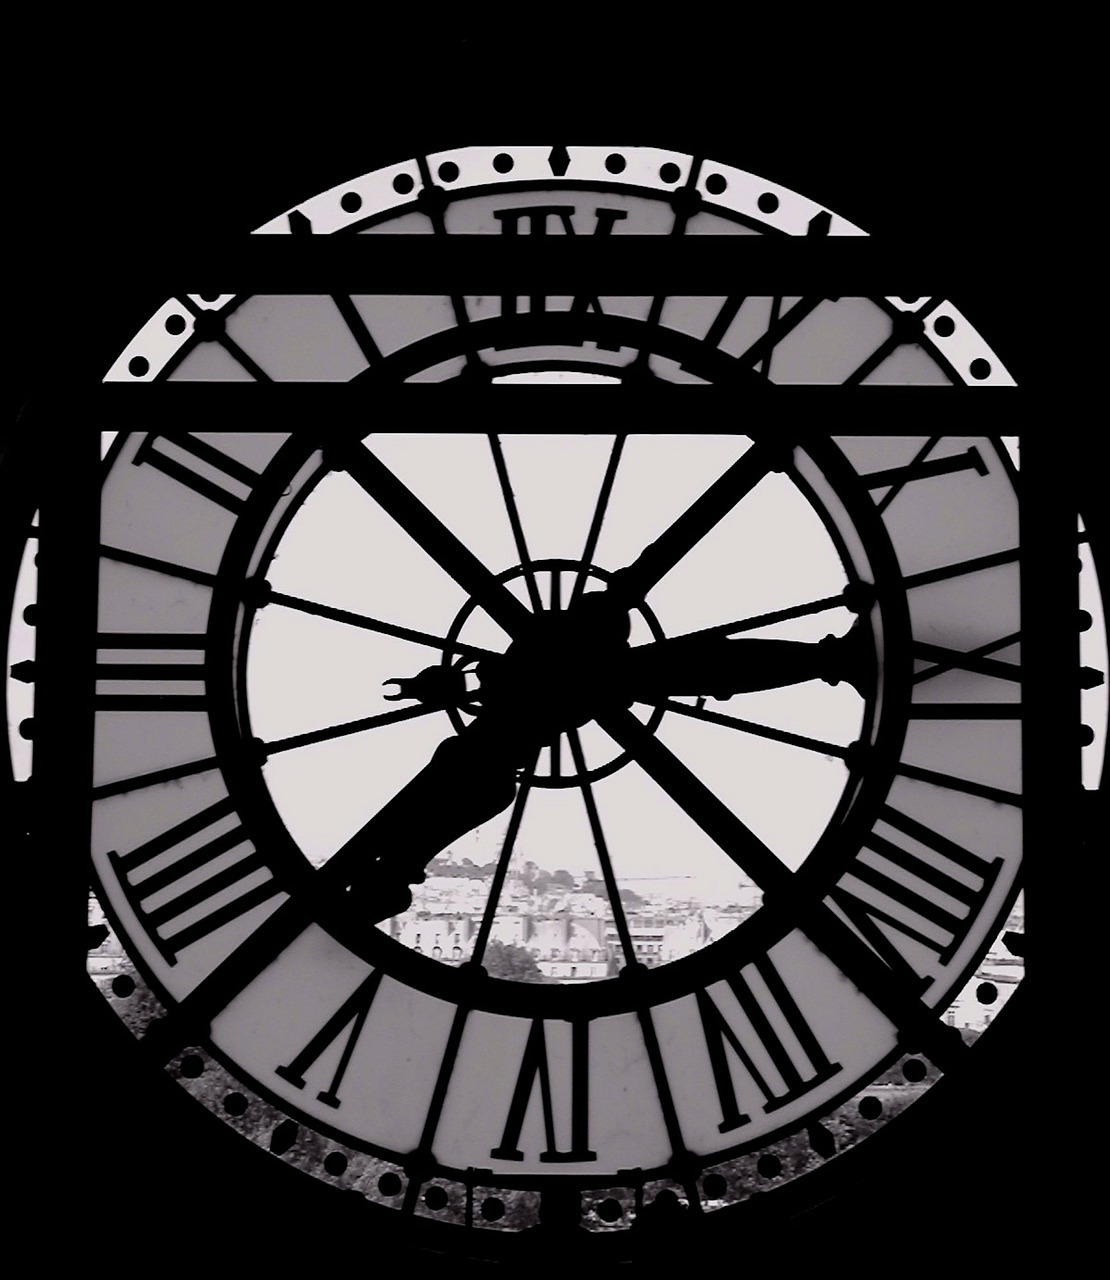 Laikrodis, Laikas, Langas, Paris, Notre Dame, Notre-Dame, France, Katedra, Architektūra, Bažnyčia